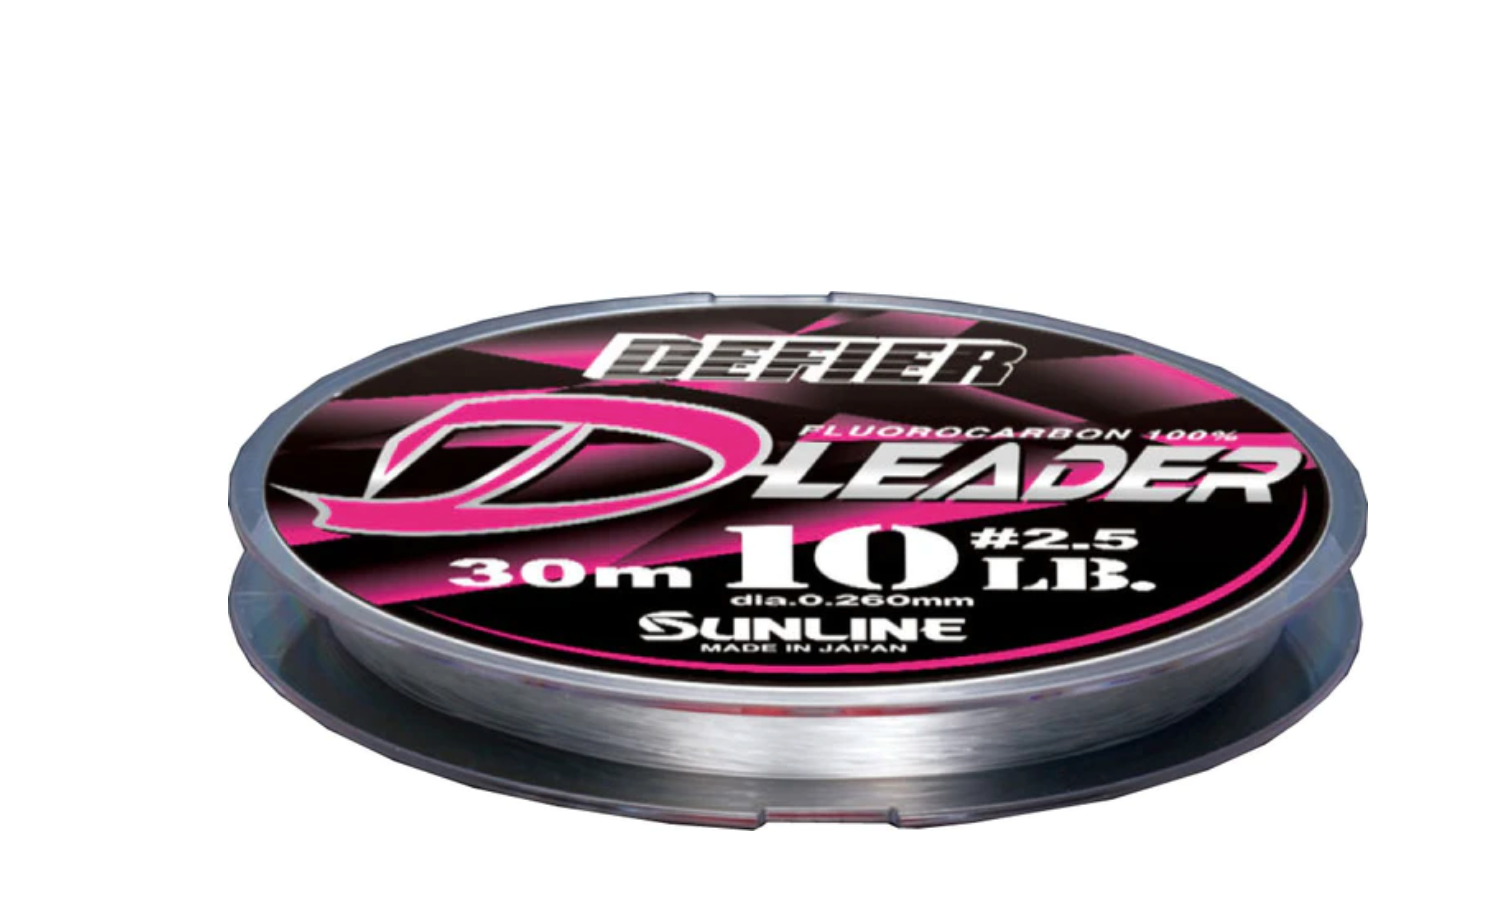 Defier D-Leader – SUNLINE America Co., Ltd.